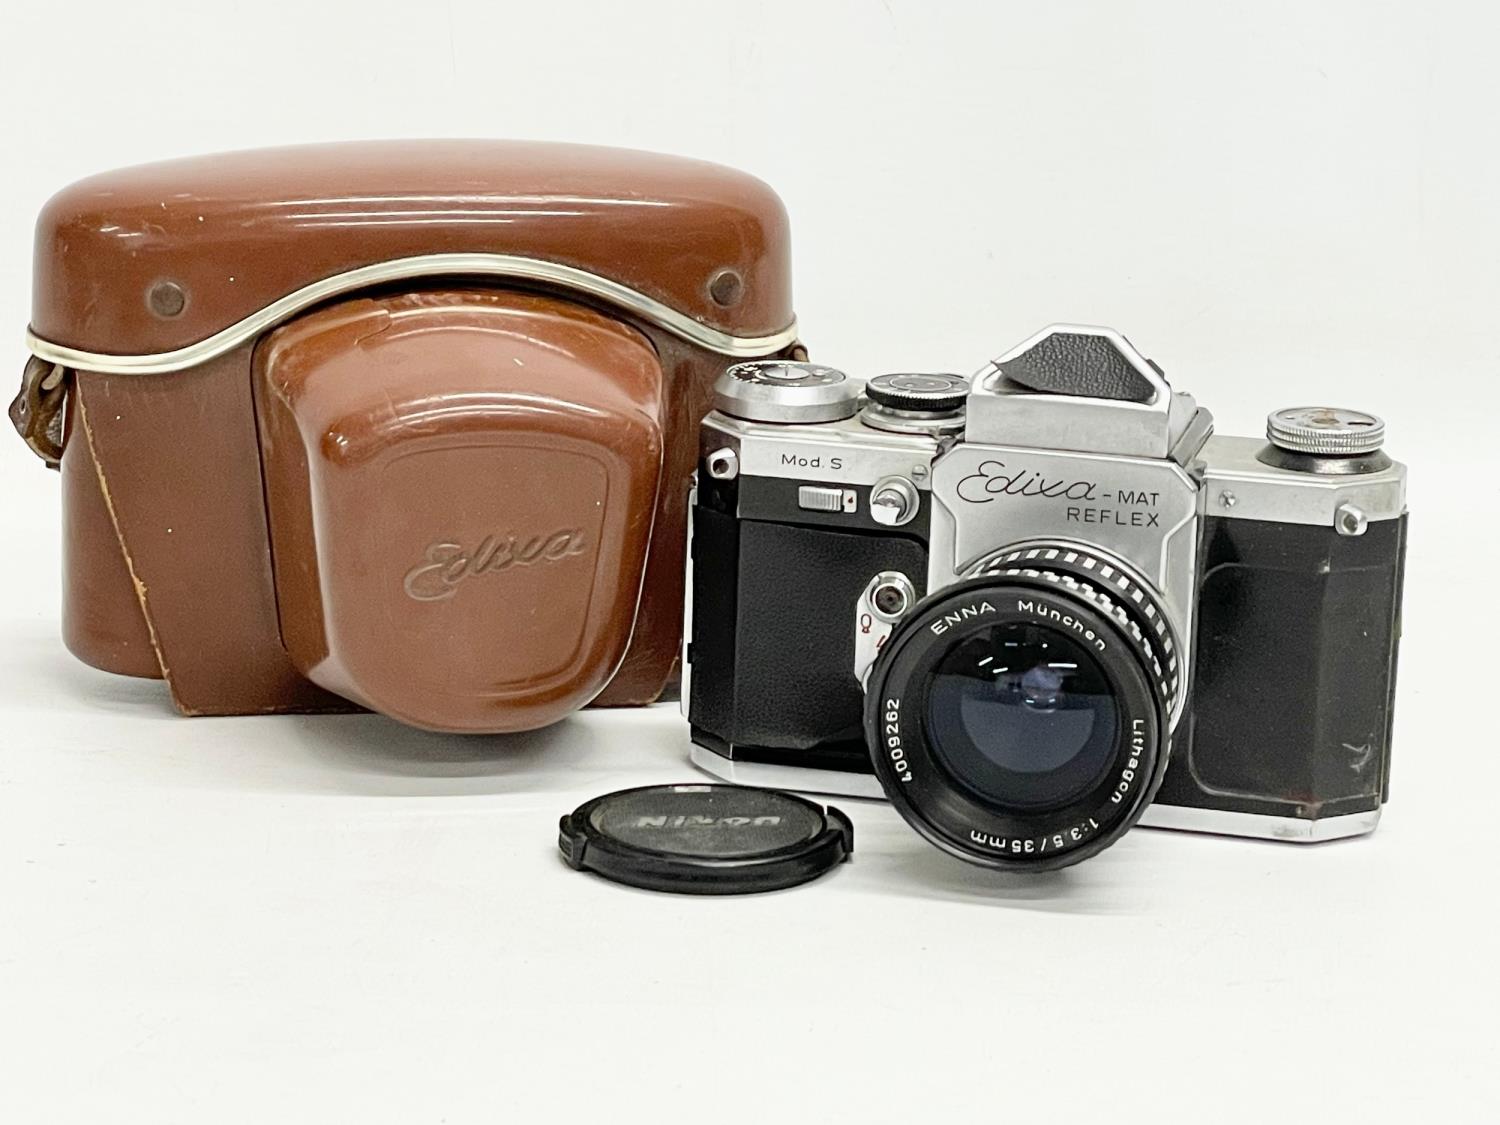 A vintage Edixa Reflex Mat Mod S camera in case.